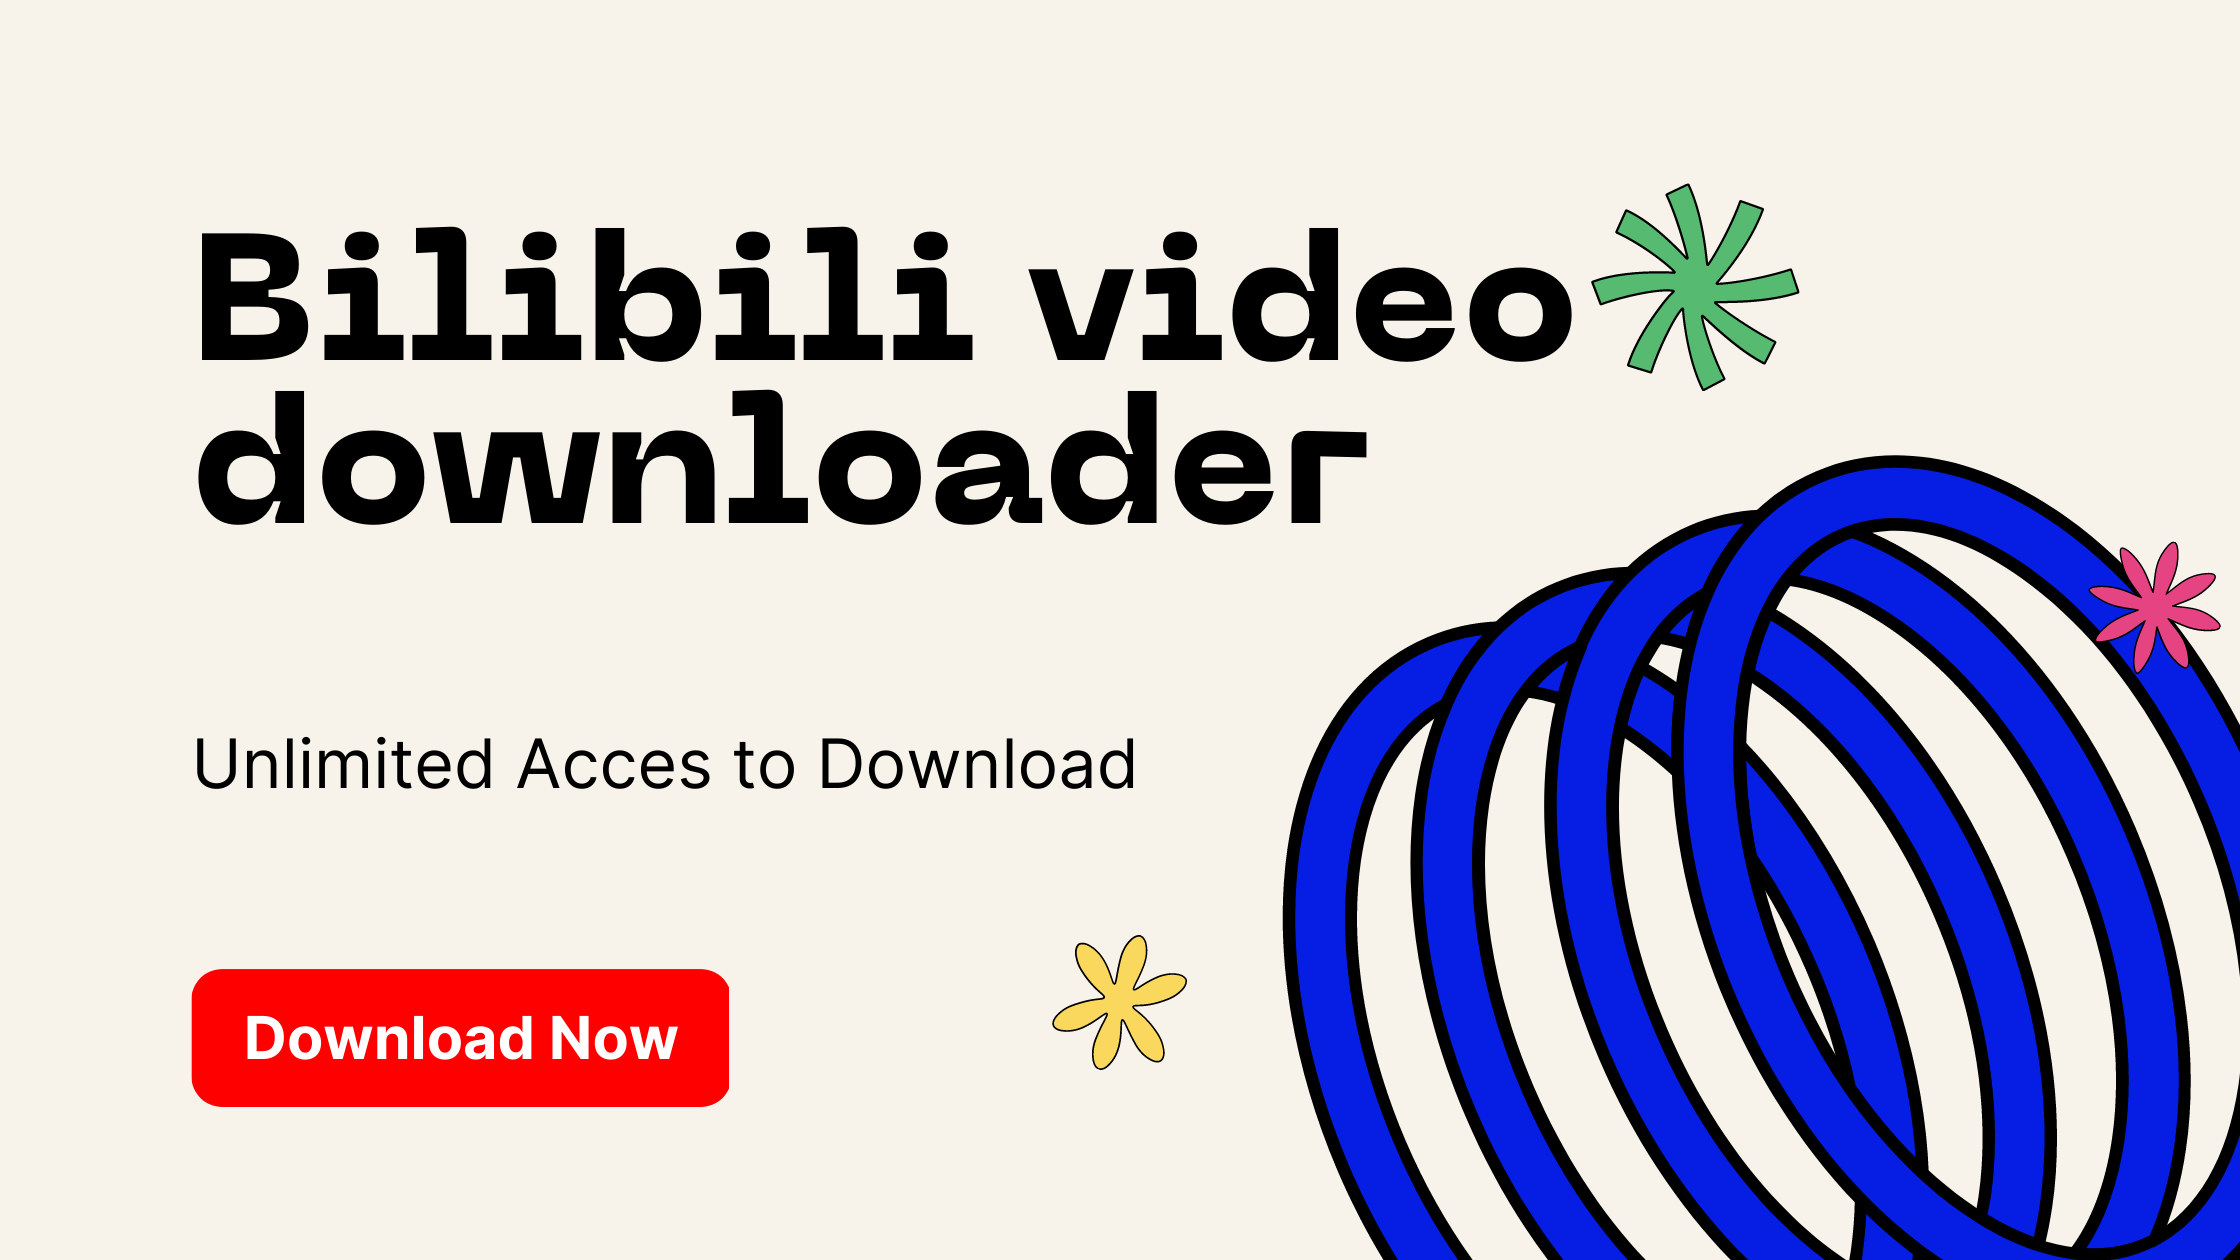 Bilibili video downloader